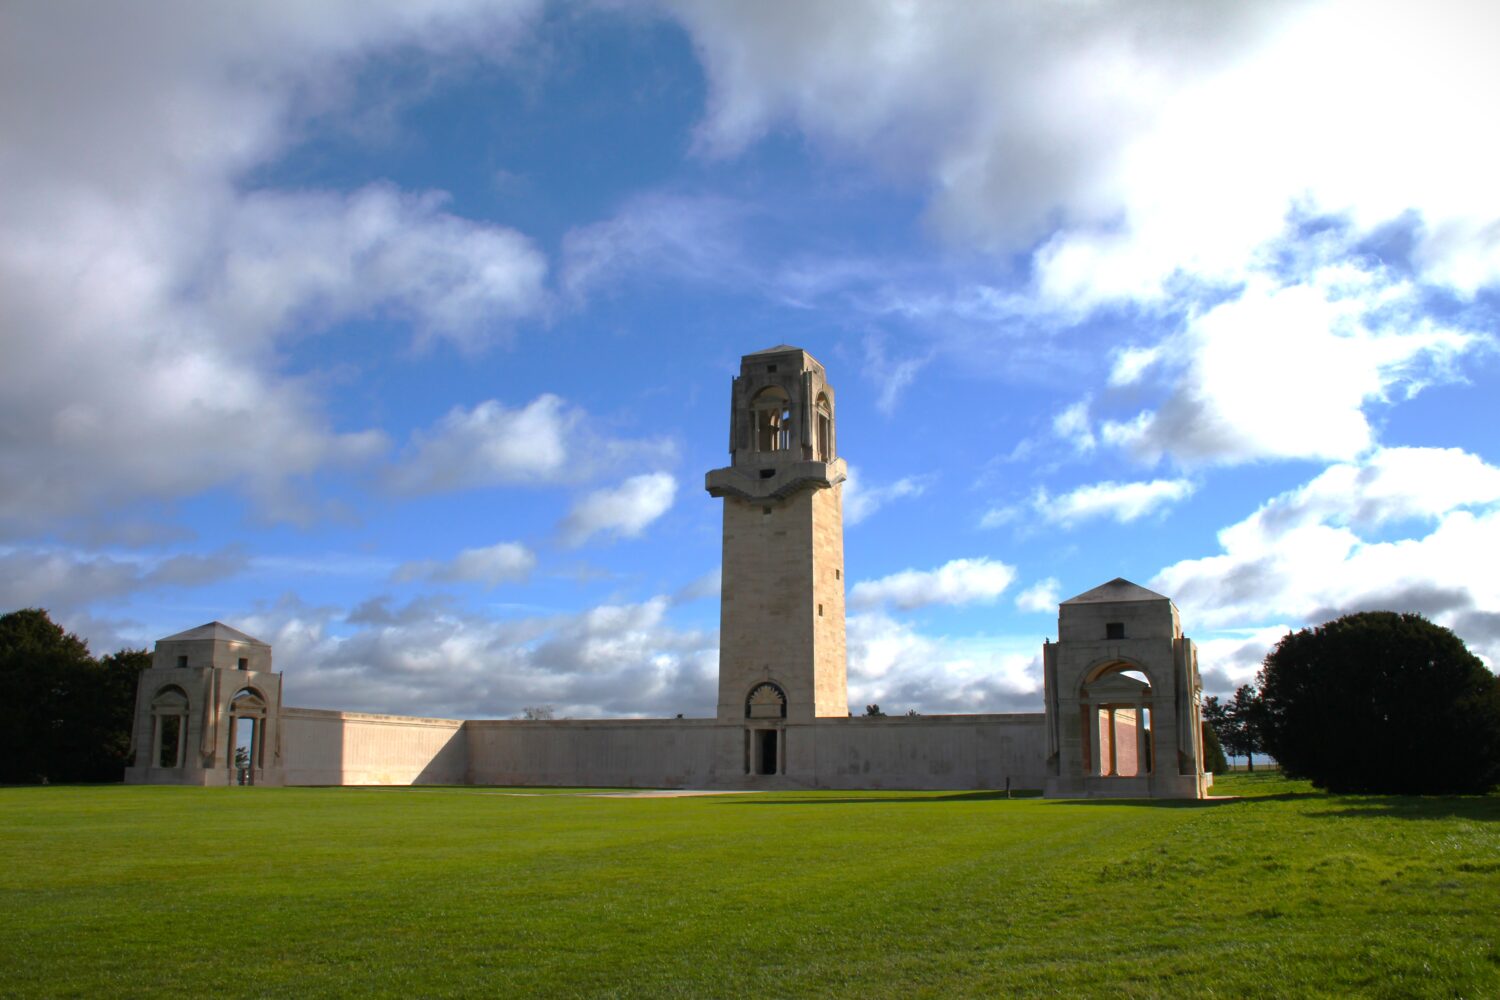 The Australian National Memorial